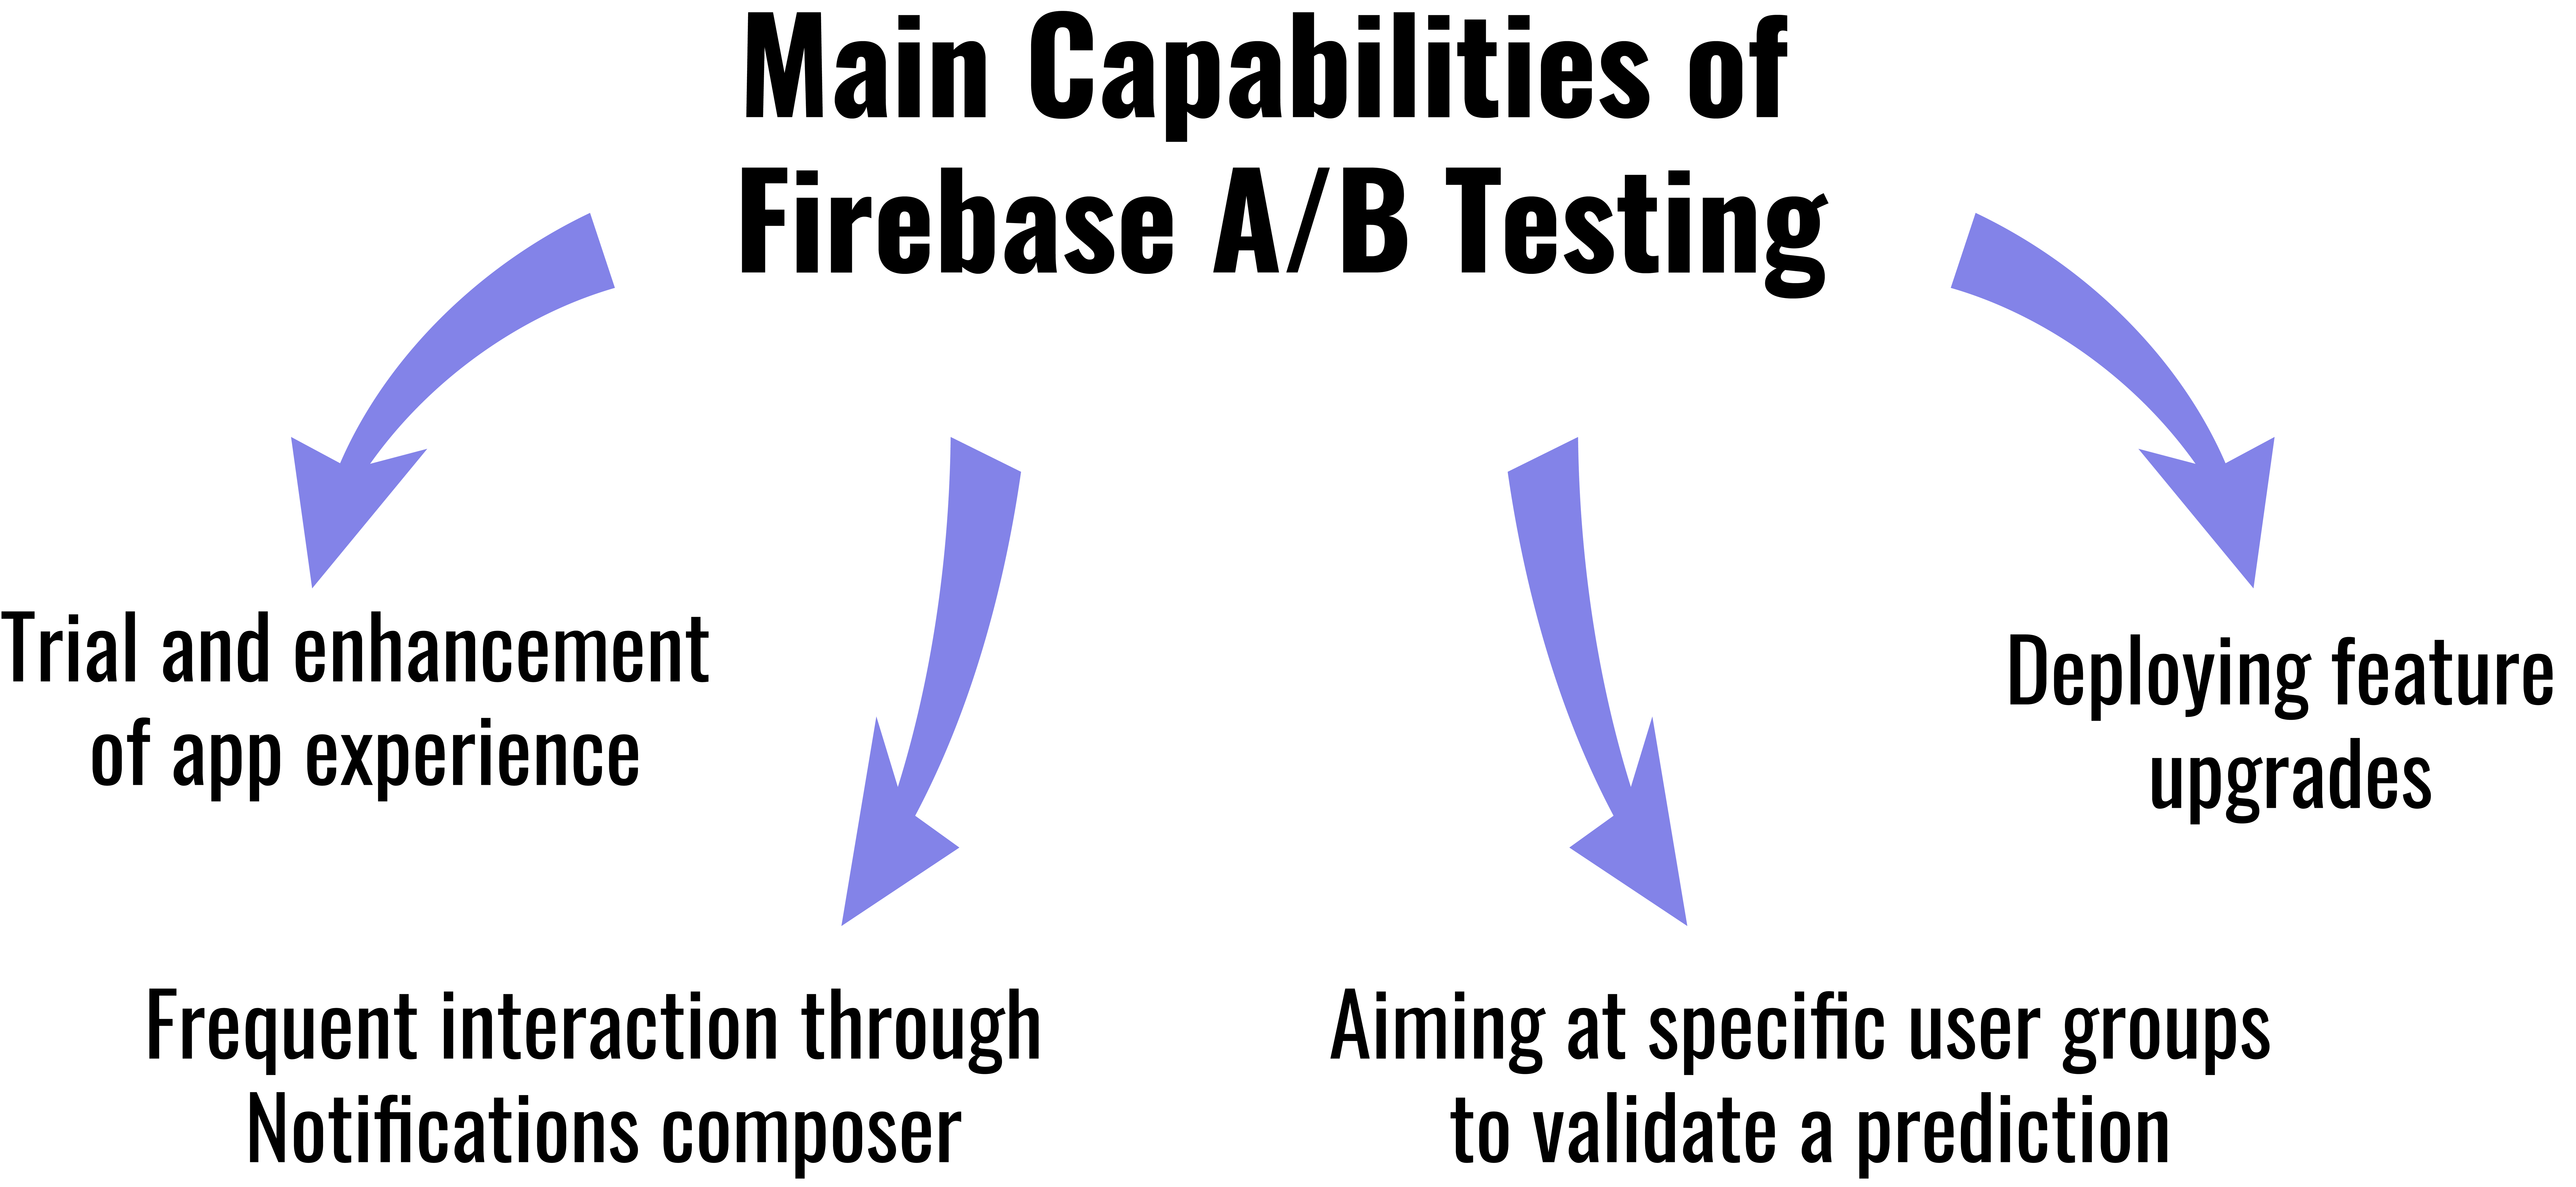 Capabilities of Firebase A/B Testing